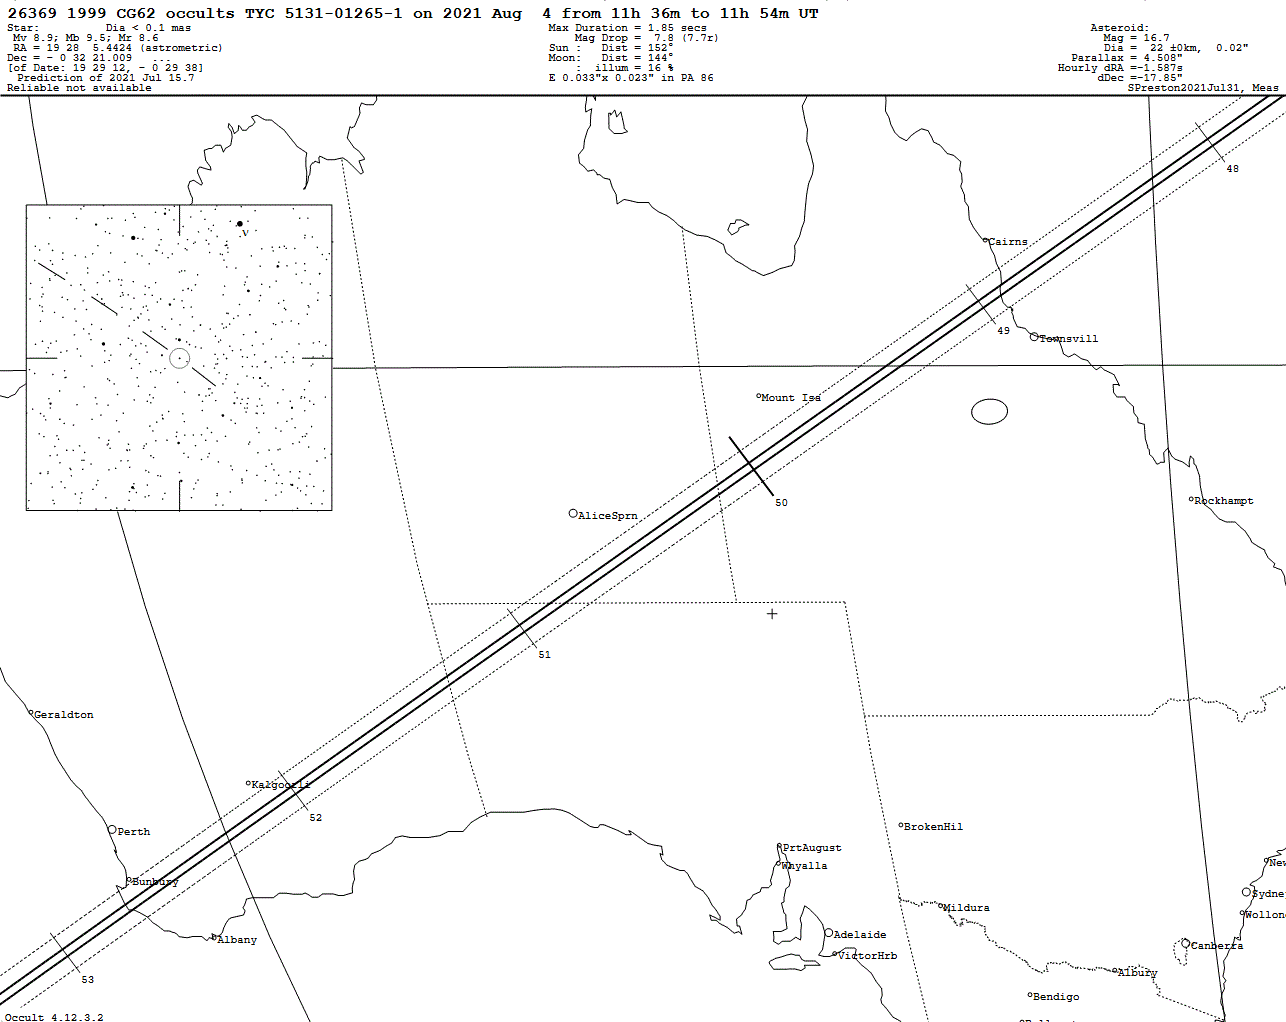 1999 CG62 Update Map